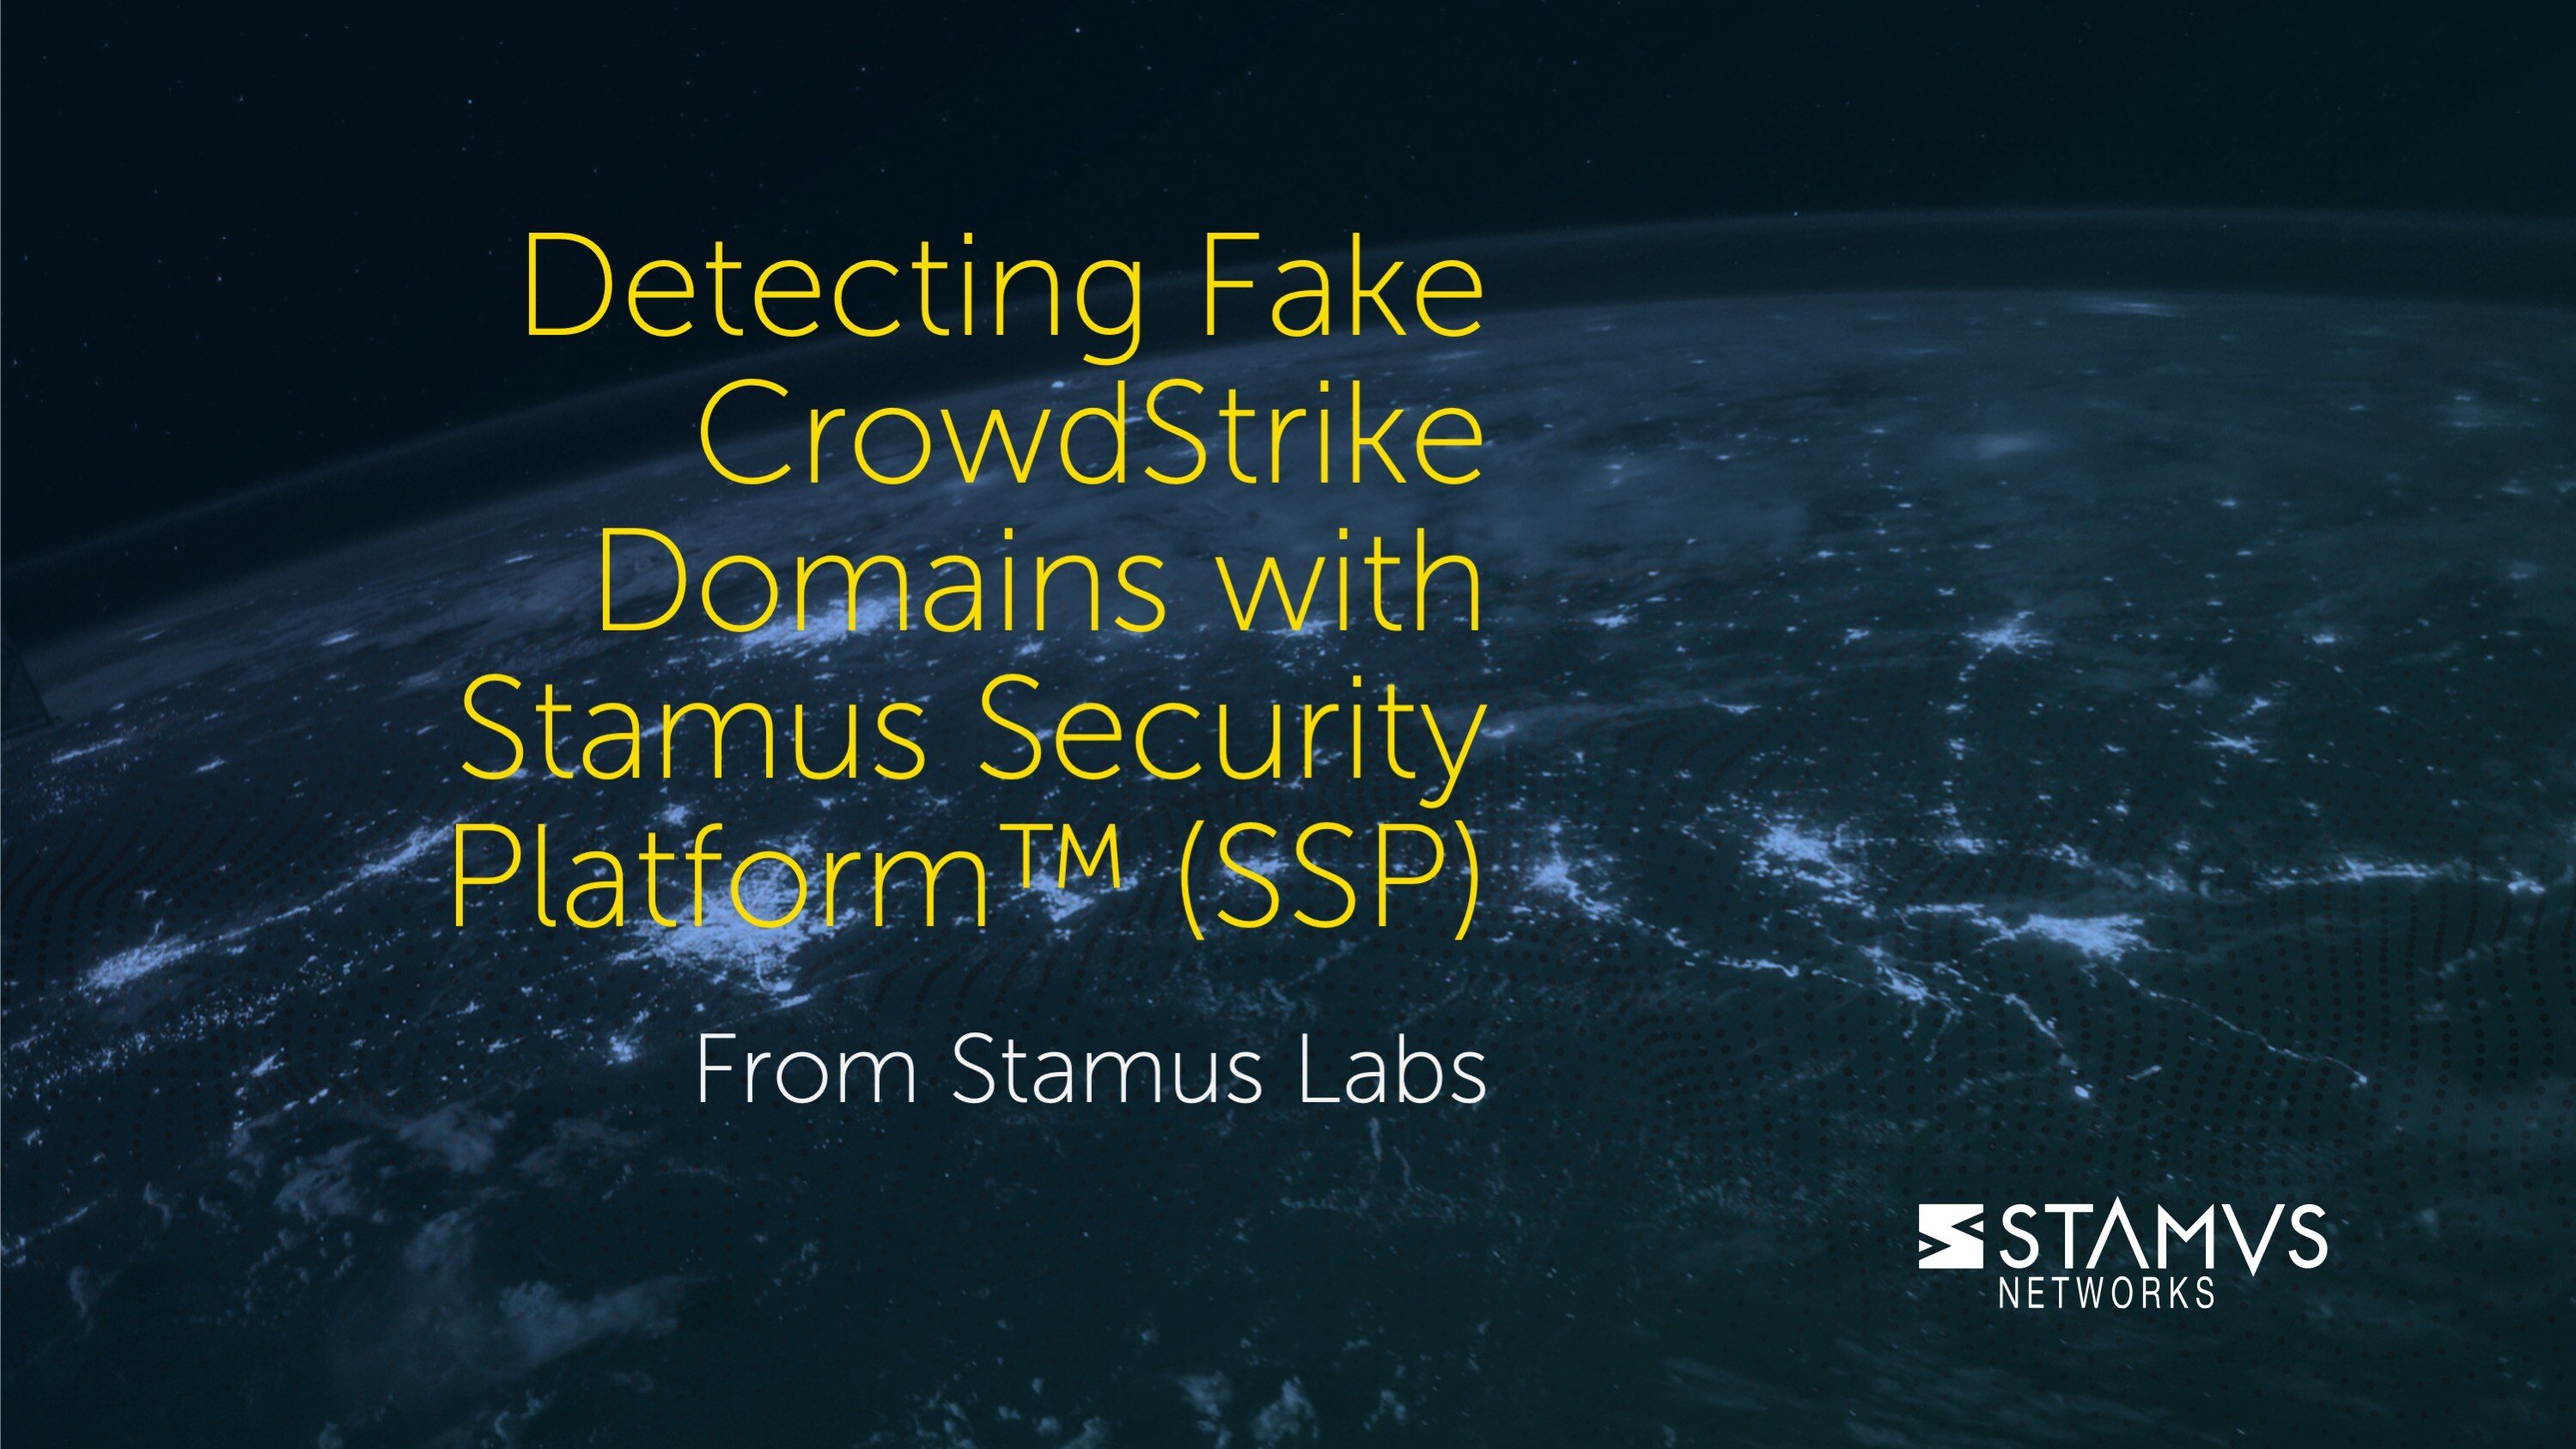 Detecting Fake CrowdStrike Domains Communications using Stamus Security Platform (SSP)